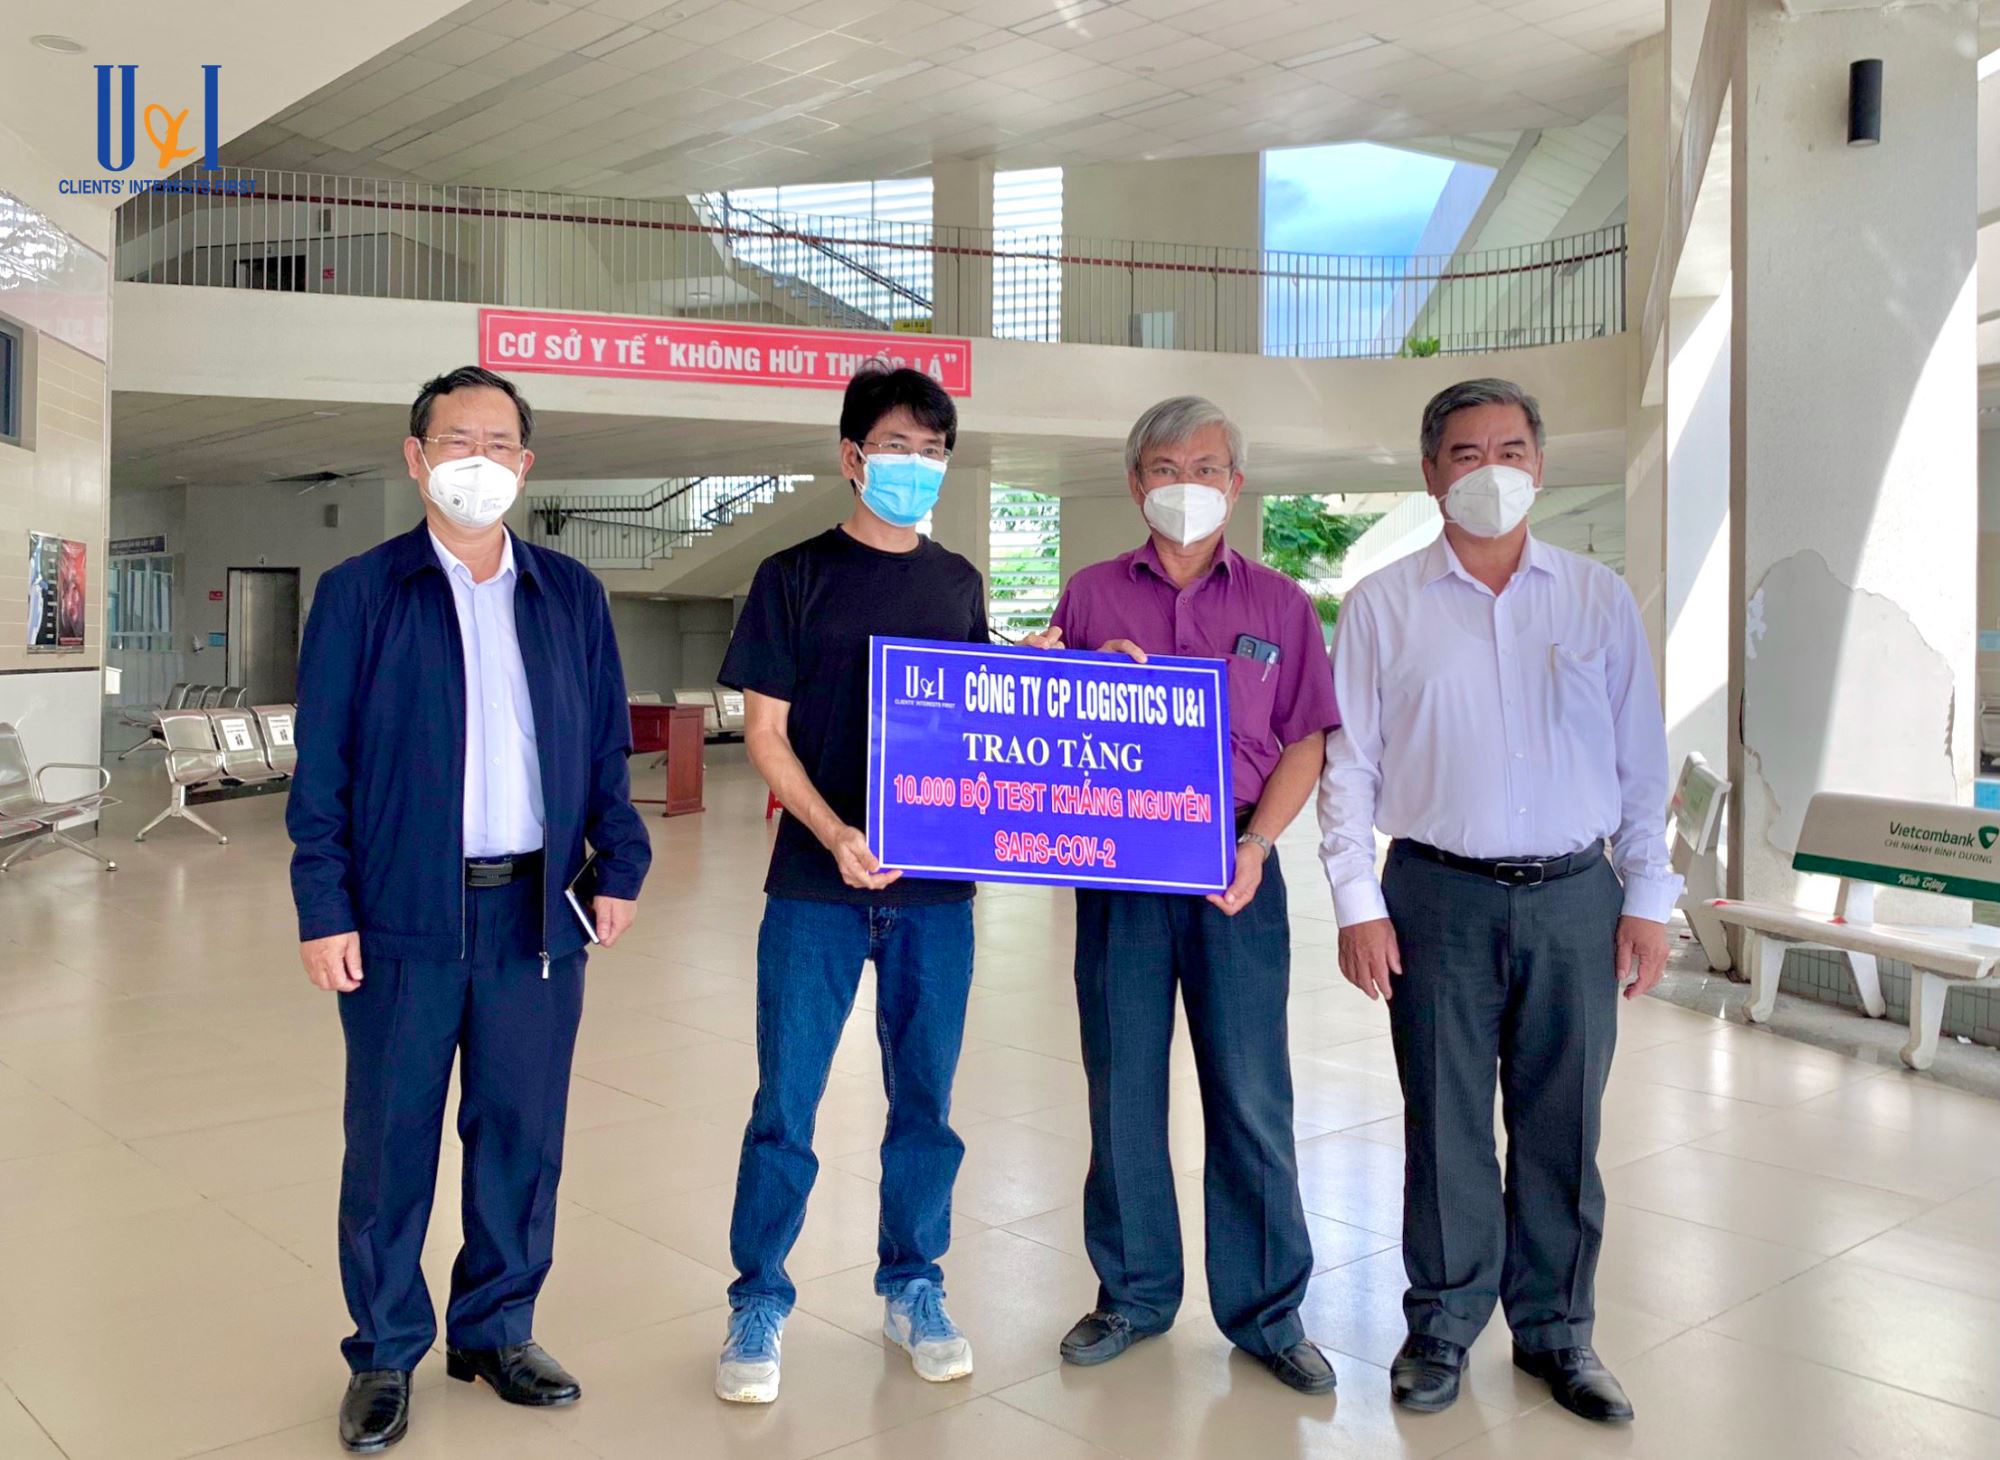 U&I Logistics donated 10,000 SARS-COV-2 antigen test kits and 15 boxes of medical masks to Tan Uyen town, Binh Duong